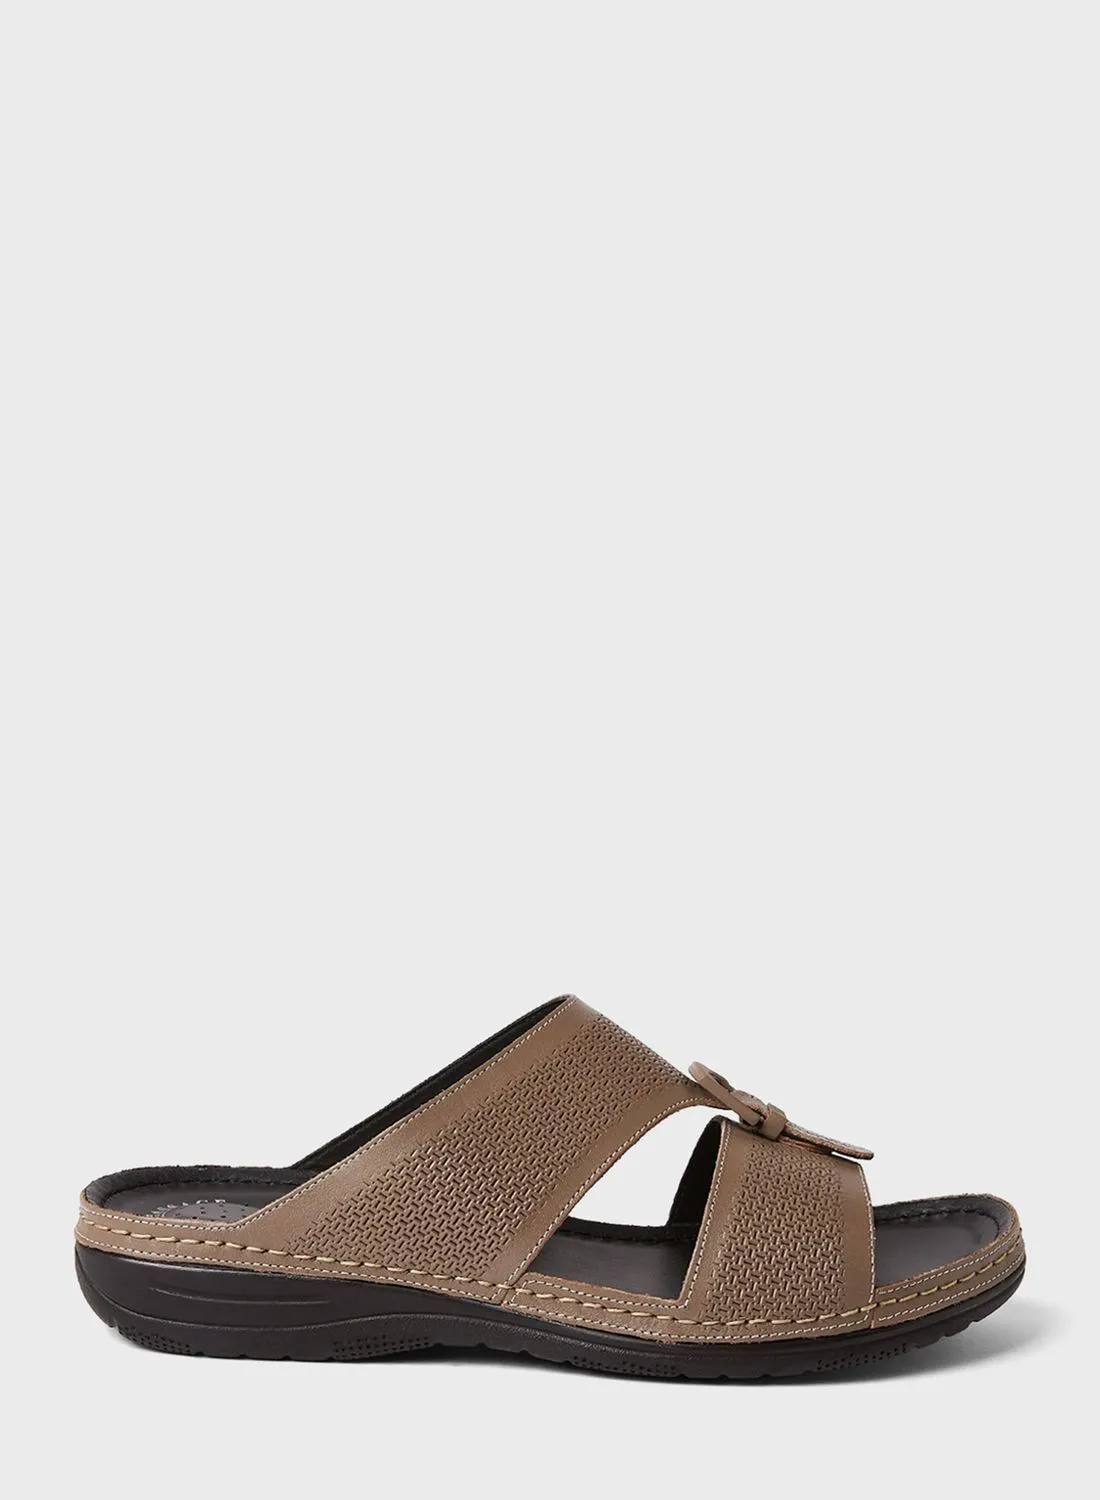 Comfort Plus Textured Leather Sandals